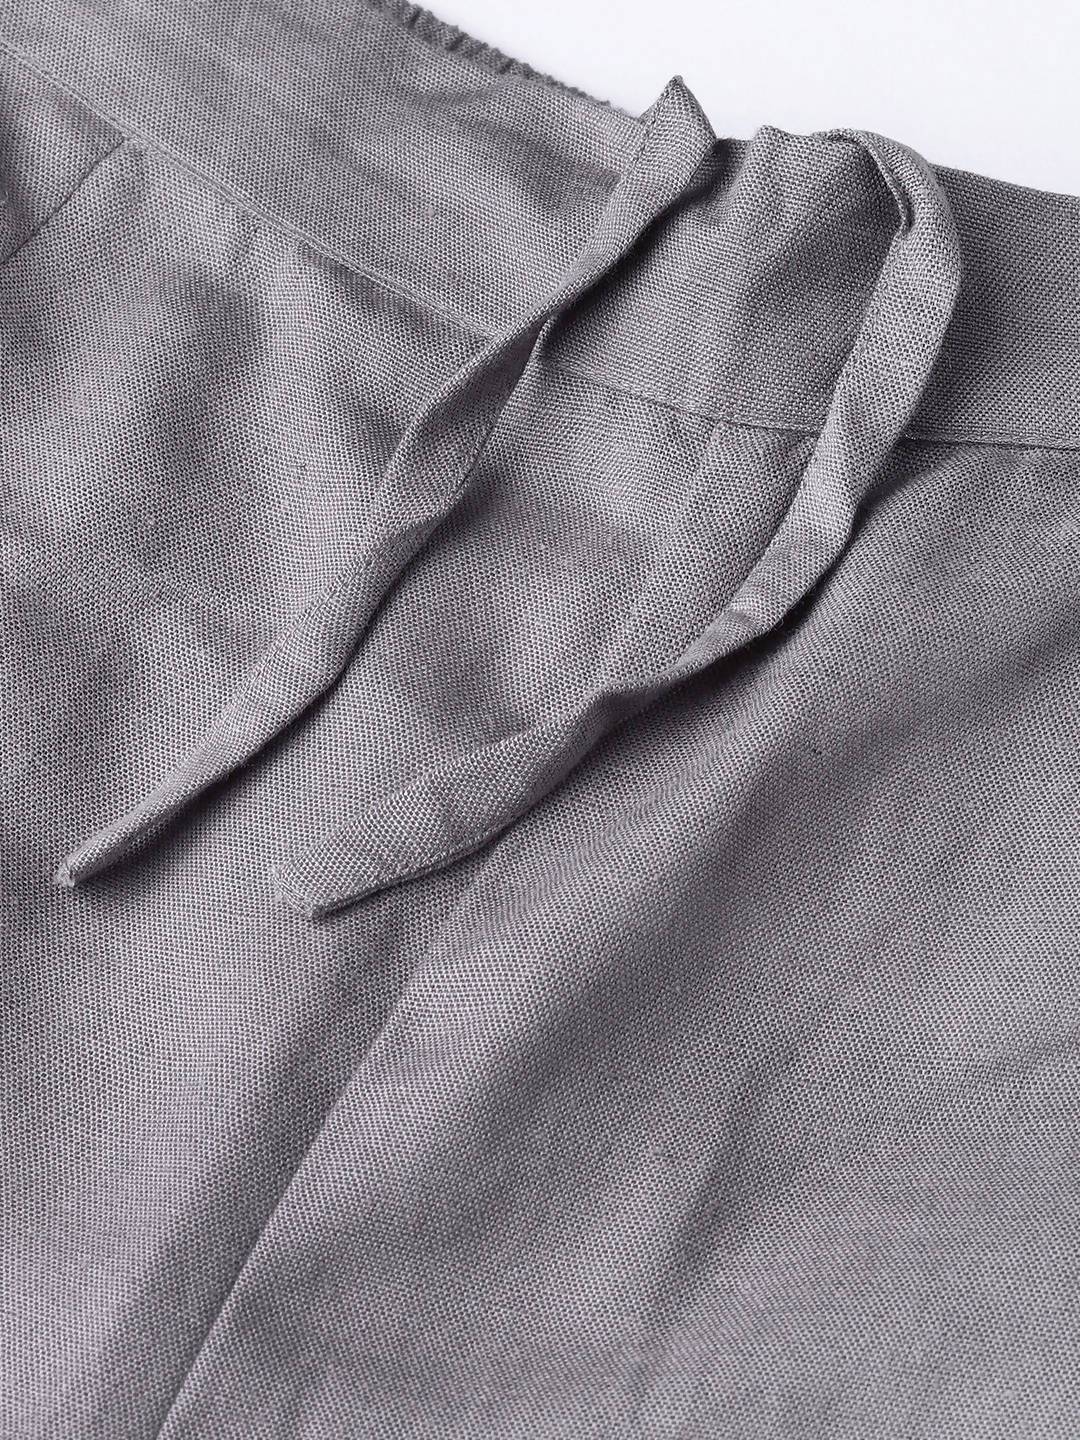 Women's Grey Rayon Solid Cigarette Pants - Juniper